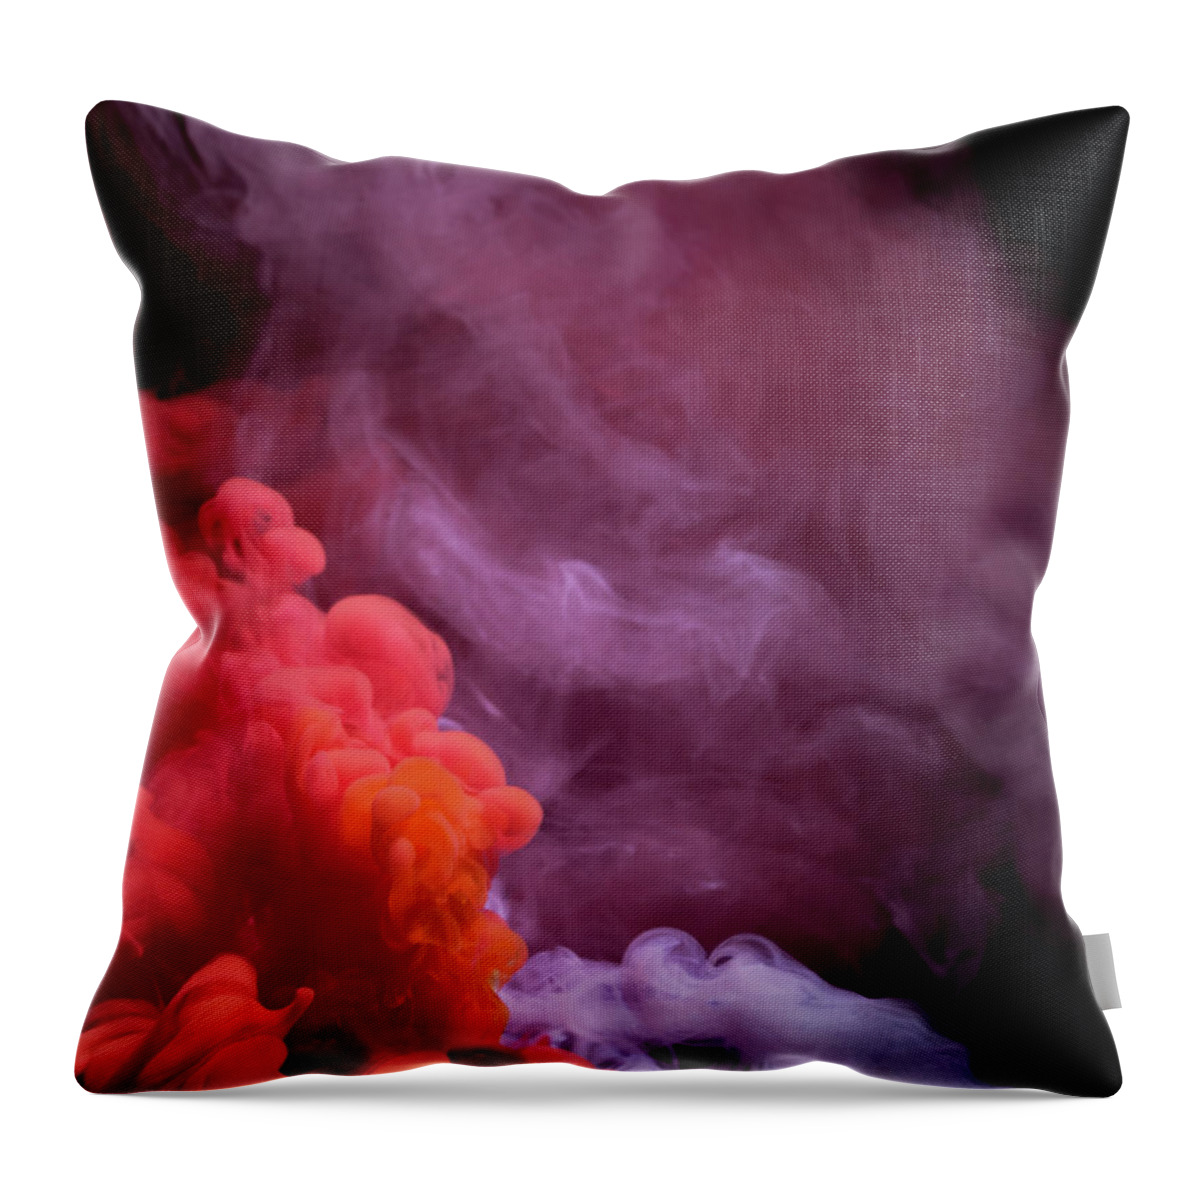 Orange Color Throw Pillow featuring the photograph Smoke #8 by Henrik Sorensen